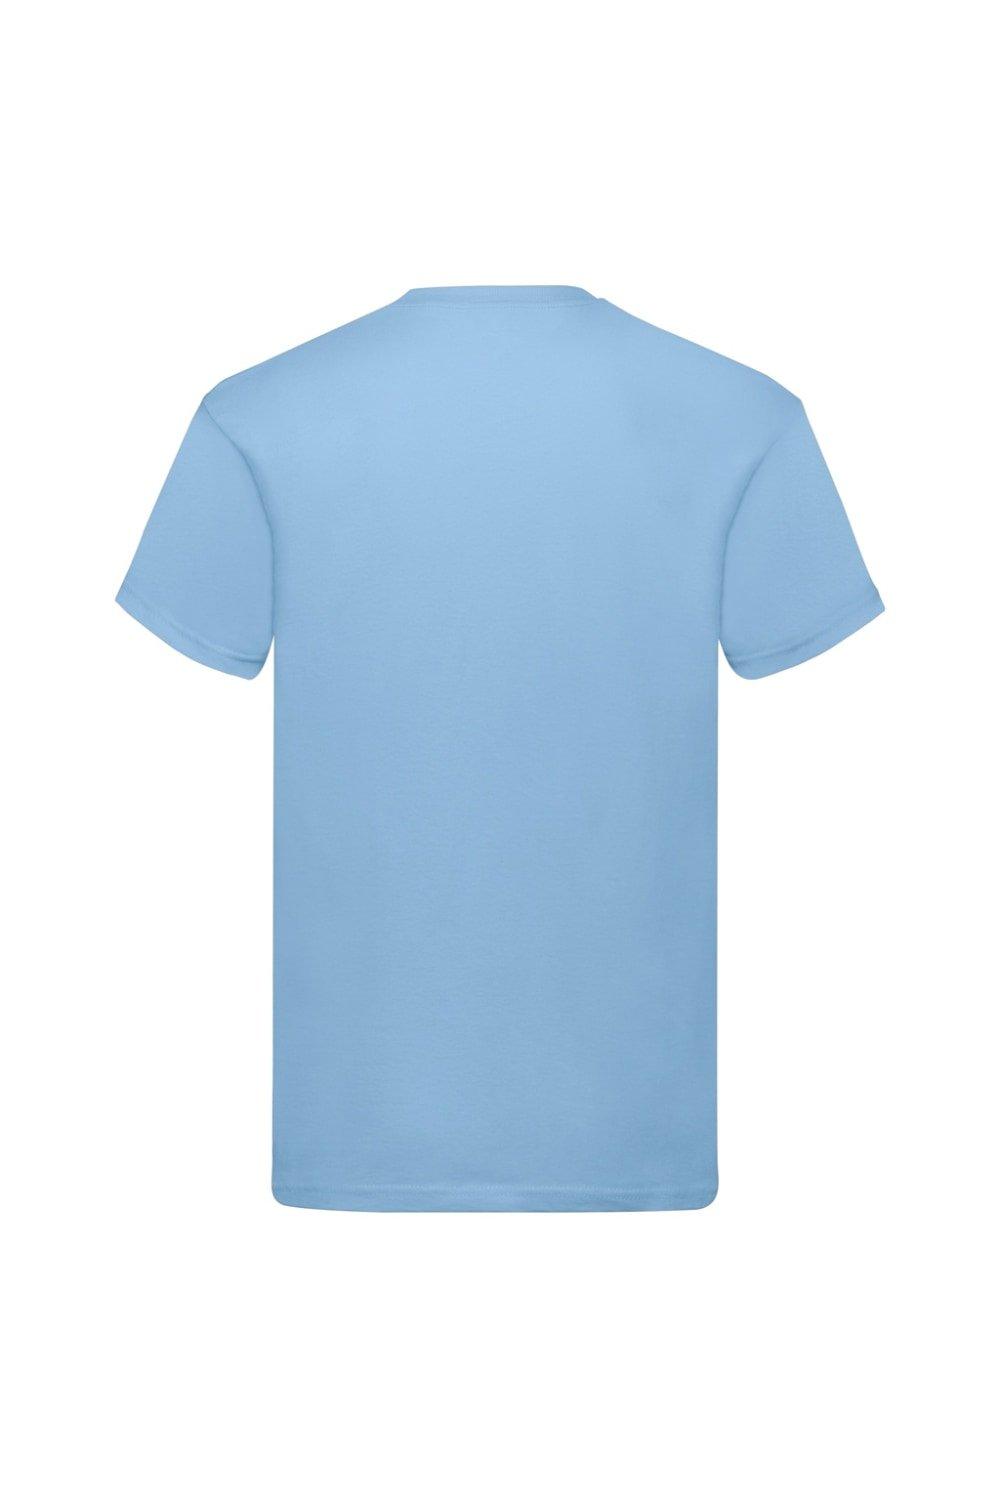 Оригинальная футболка с коротким рукавом Fruit of the Loom, синий